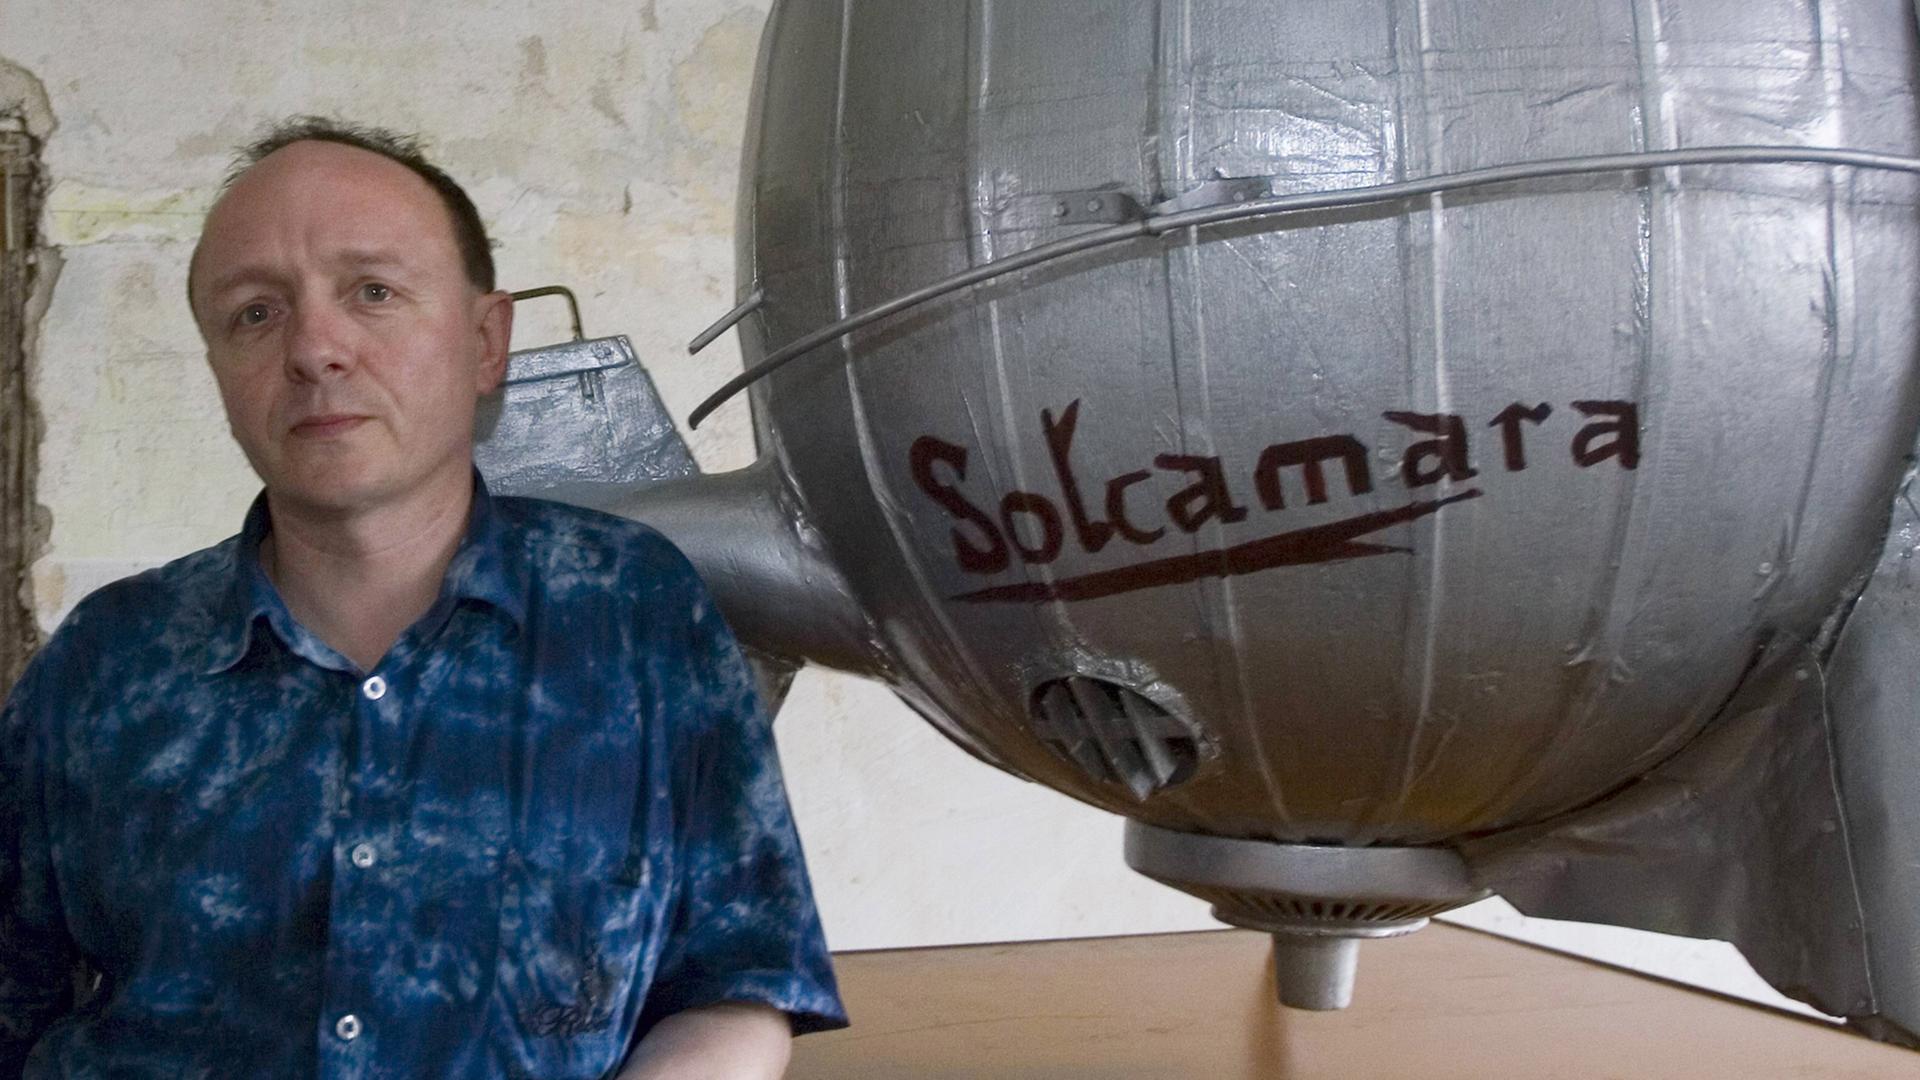 Kurator Peter Lang neben dem Modell "Solcamara" in der Ausstellung über den Weltraumphantasten Karl Hans Janke.